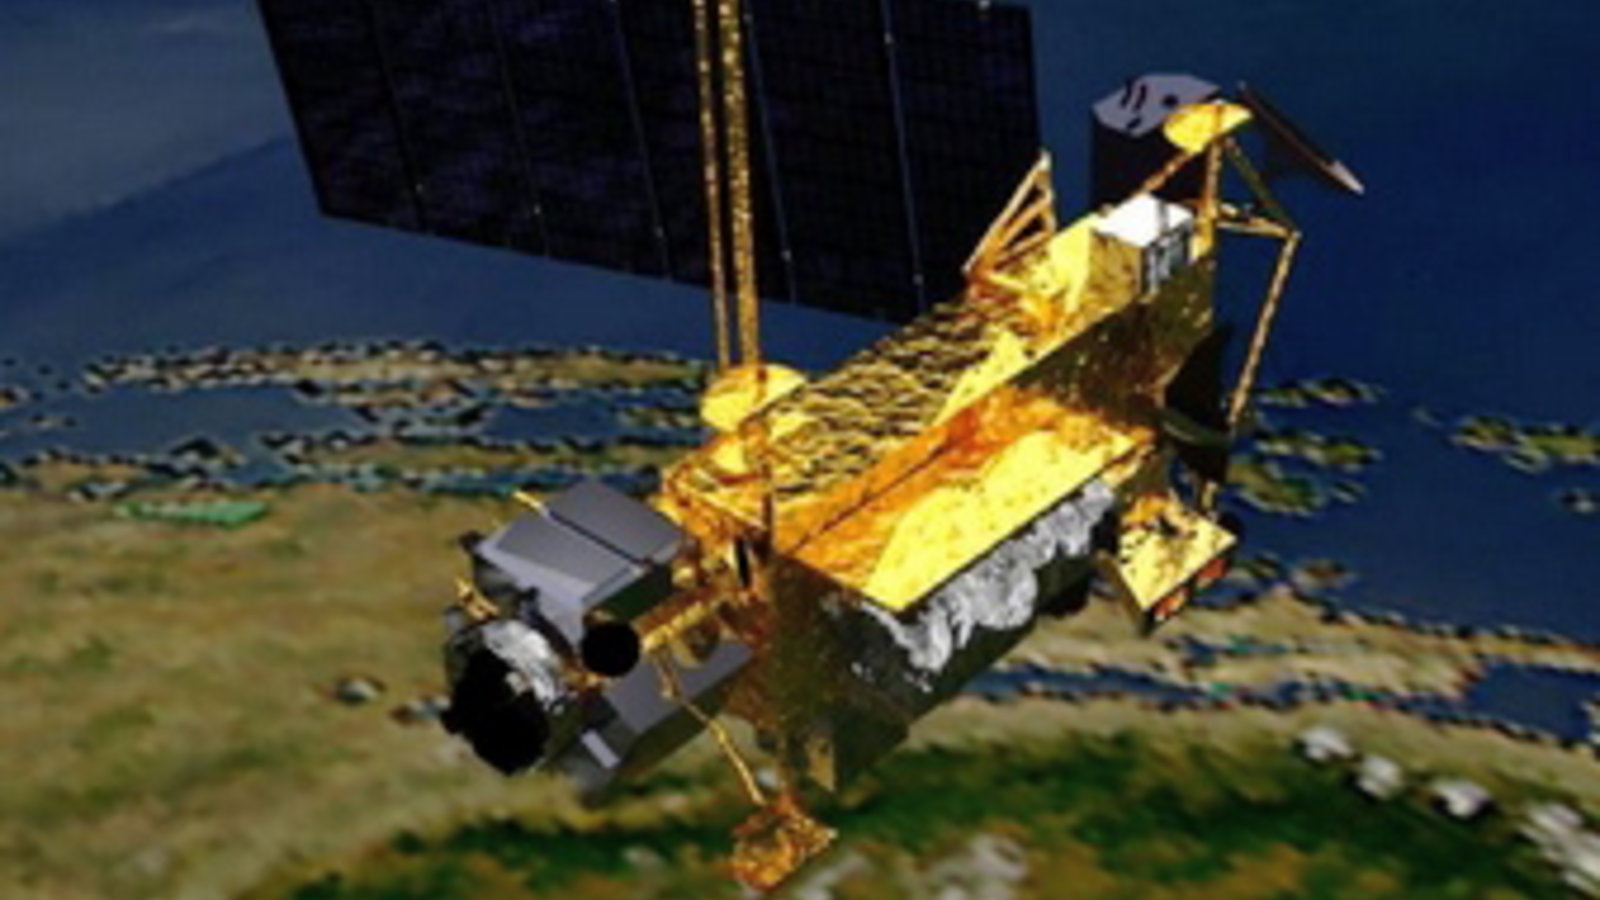 satellite-uars-nasa.jpg